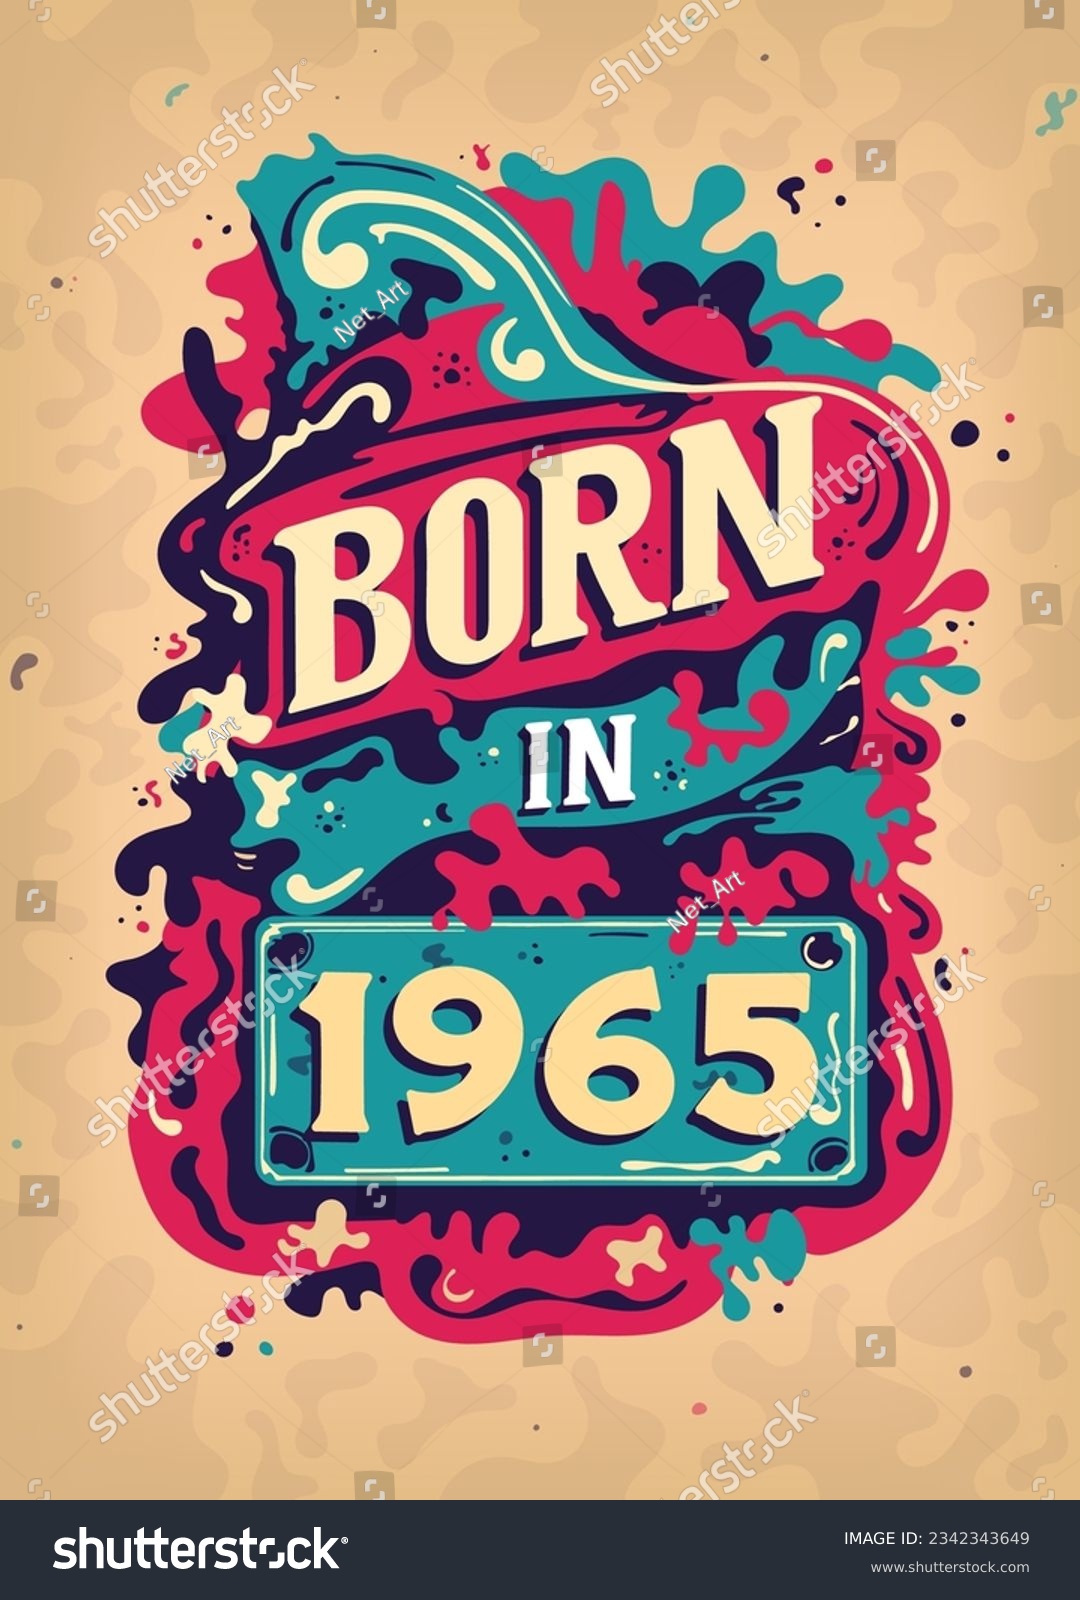 SVG of Born In 1965 Colorful Vintage T-shirt - Born in 1965 Vintage Birthday Poster Design. svg